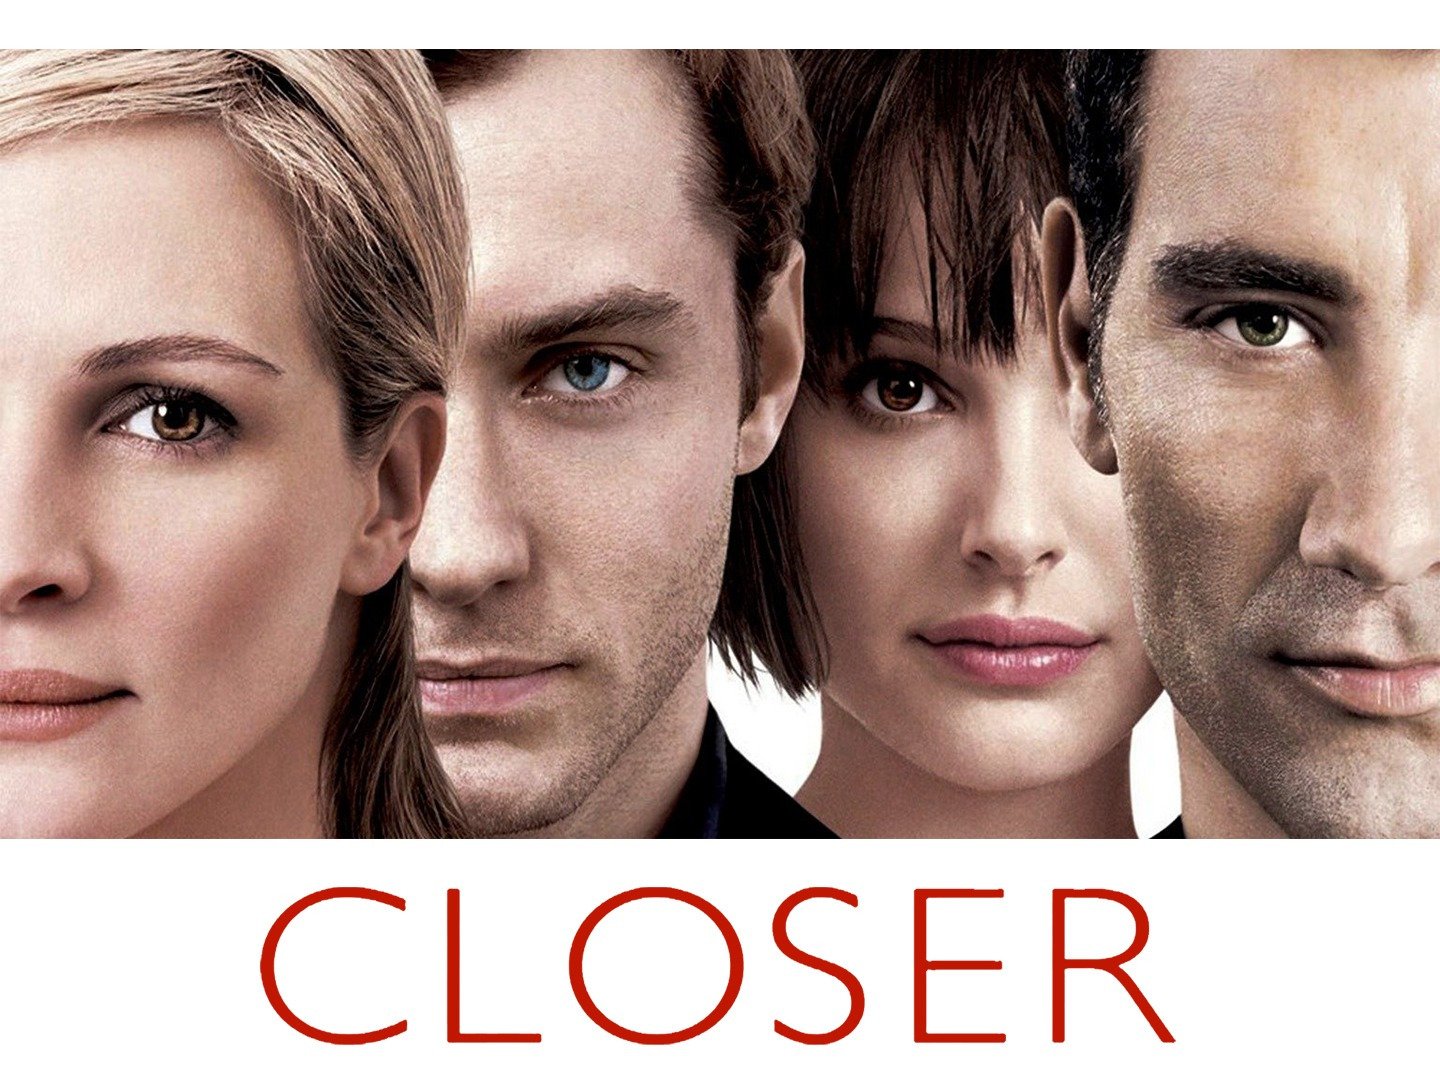 movie review of closer